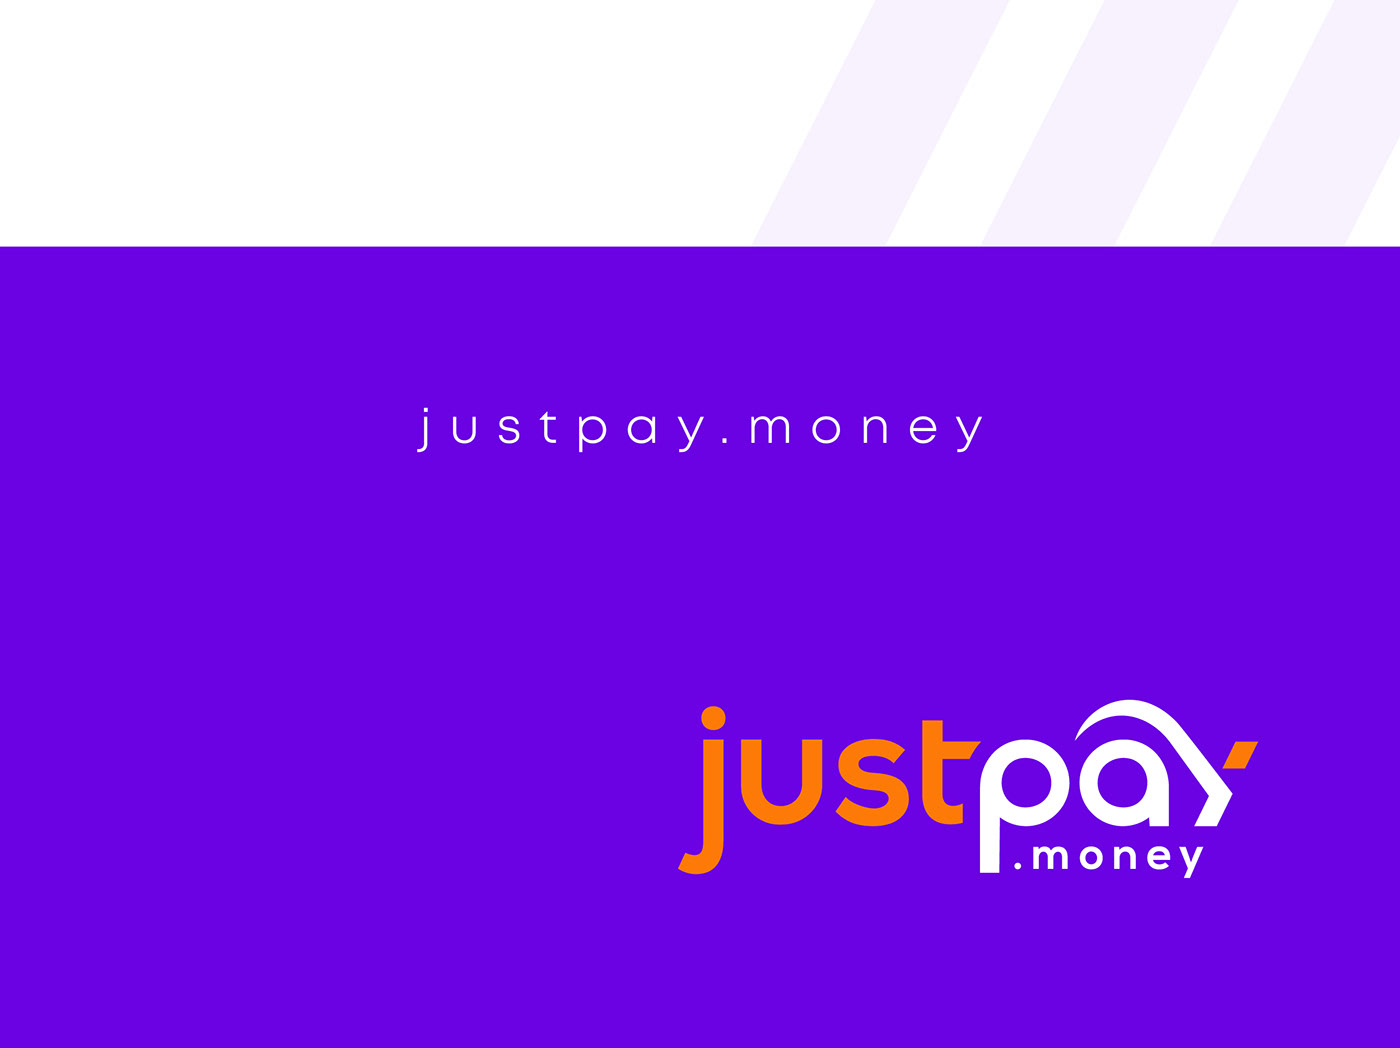 JUSTPAY.MONEY Logo Design